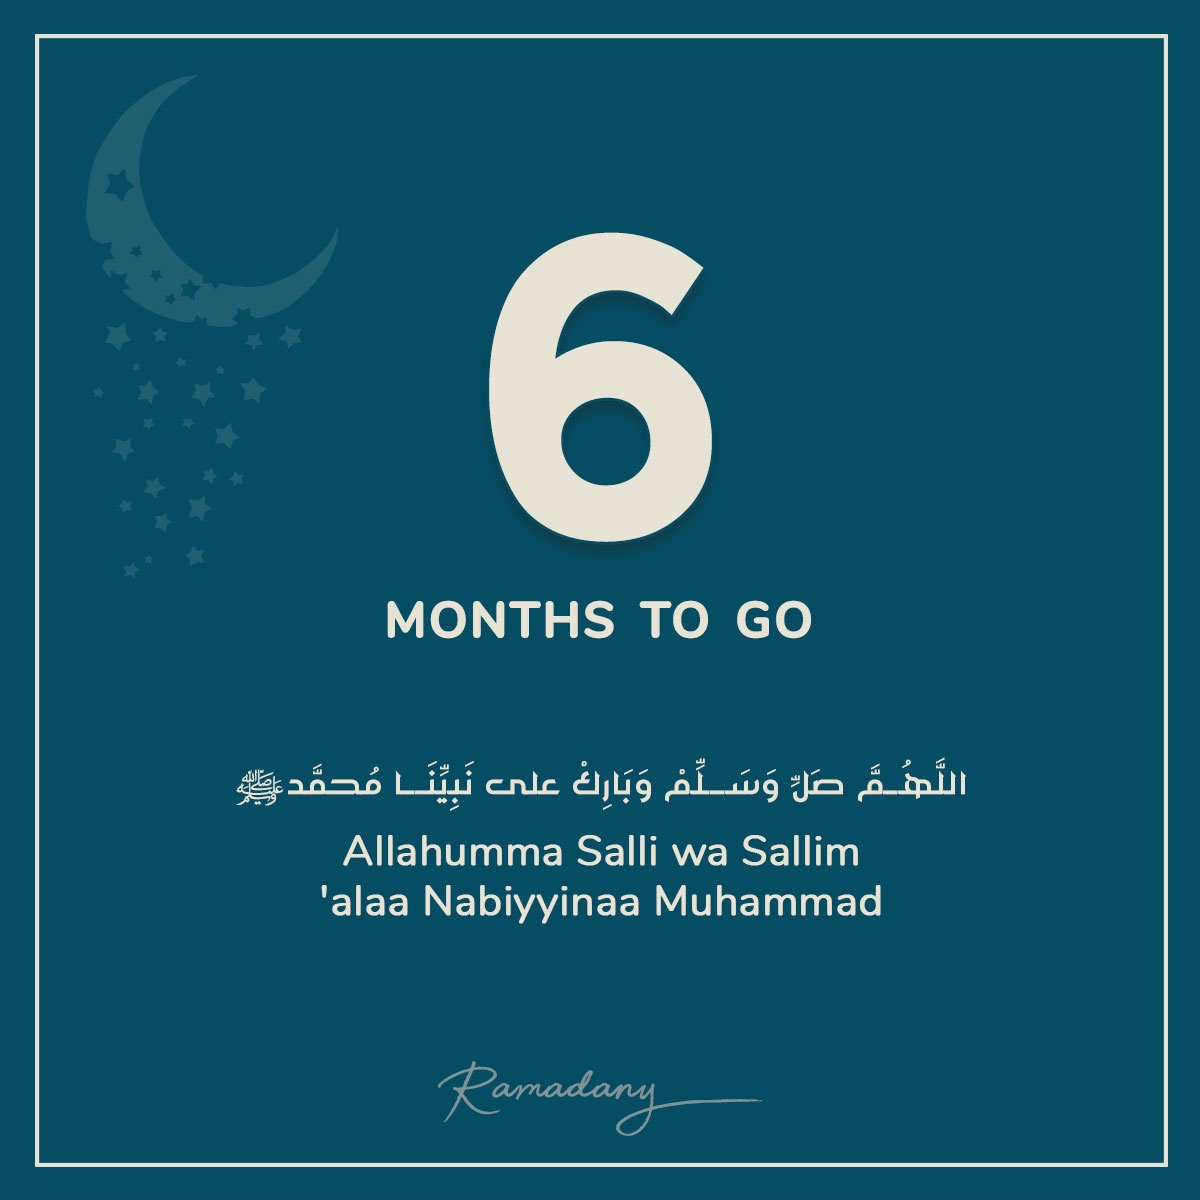 Ramadan 2022 6 months to go